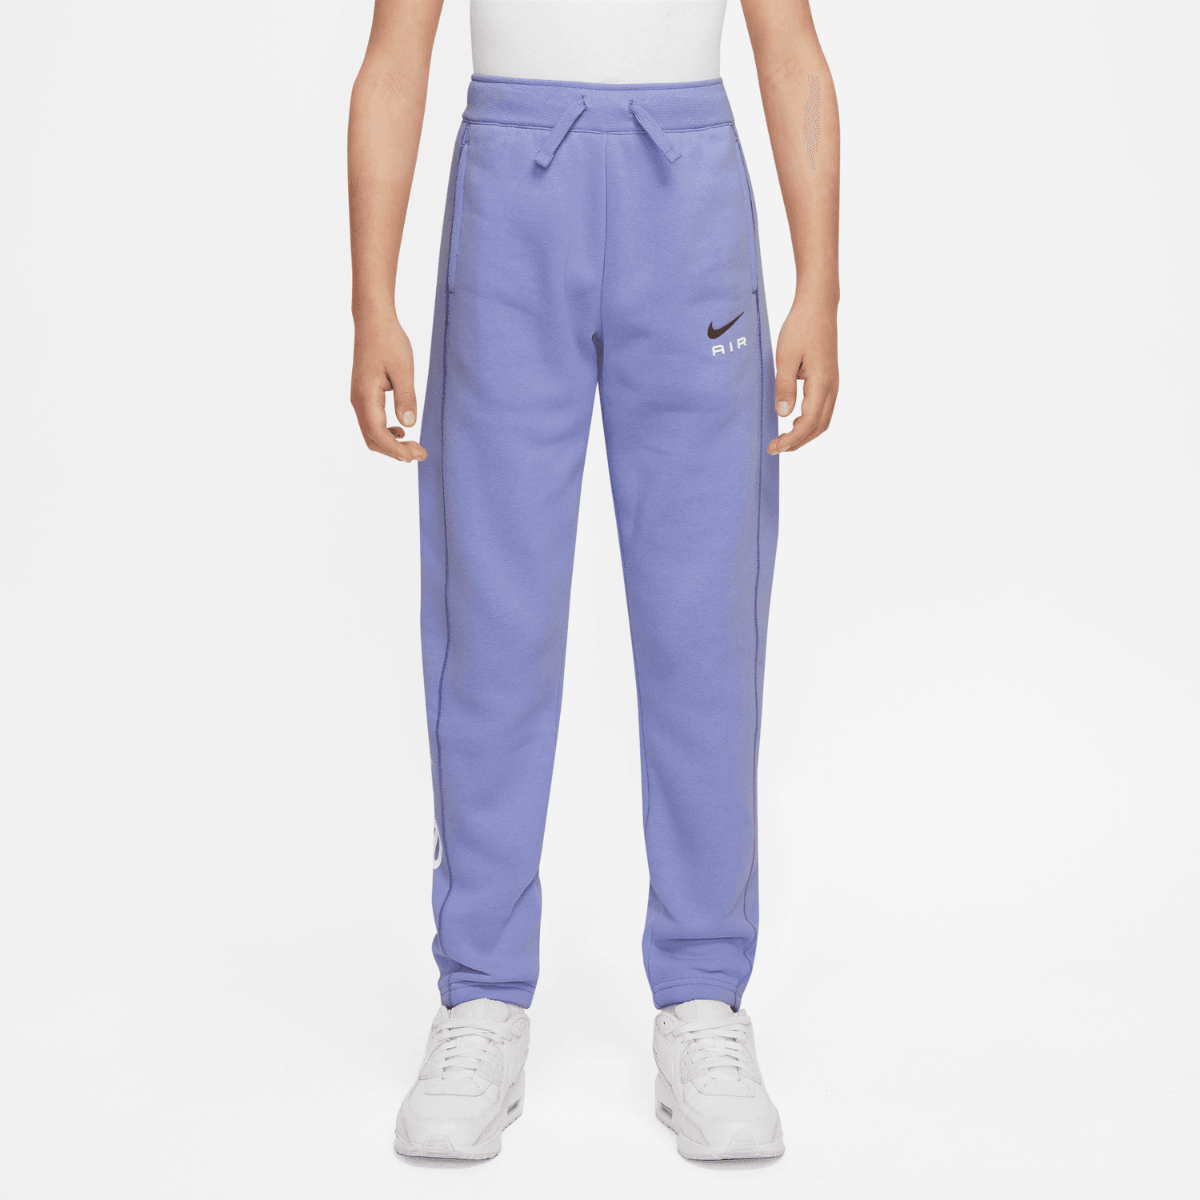 Pantaloni Nike Air Junior - Viola/Marrone/Bianco